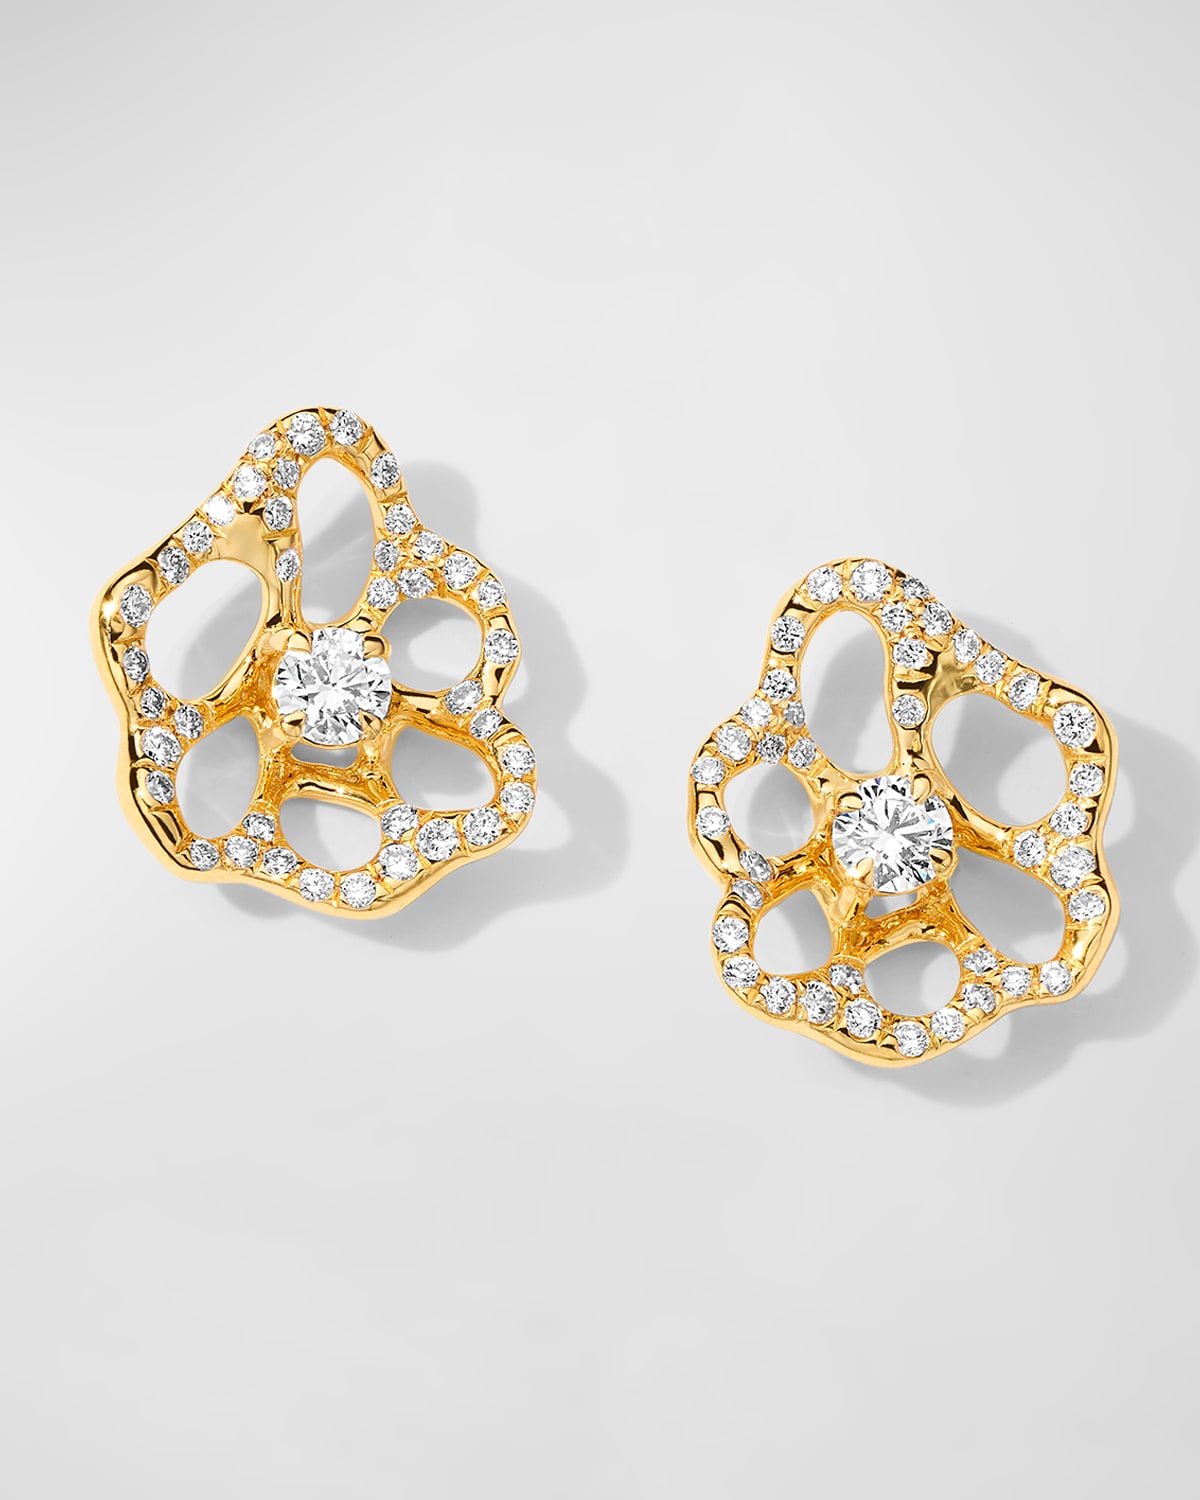 IPPOLITA 18K STARDUST DRIZZLE MINI FLOWER STUD EARRINGS WITH ROUND BRILLIANT-CUT DIAMONDS